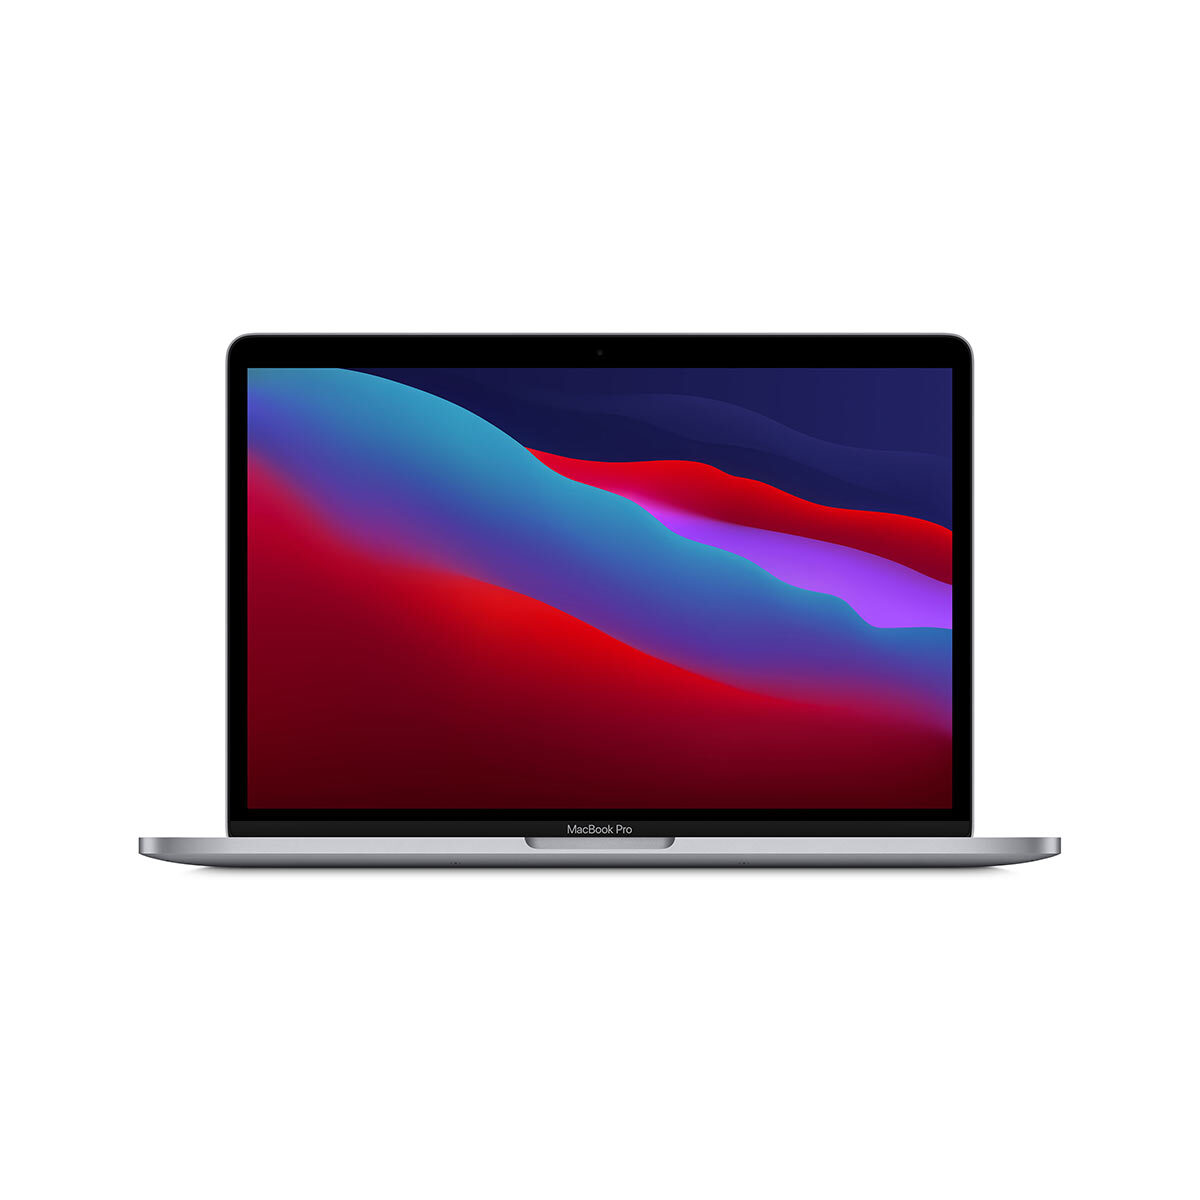 Buy Apple MacBook Pro 2020, Apple M1 Chip, 16GB RAM, 2TB SSD, 13.3 Inch in Space Grey, Z11B2000780091 at costco.co.uk